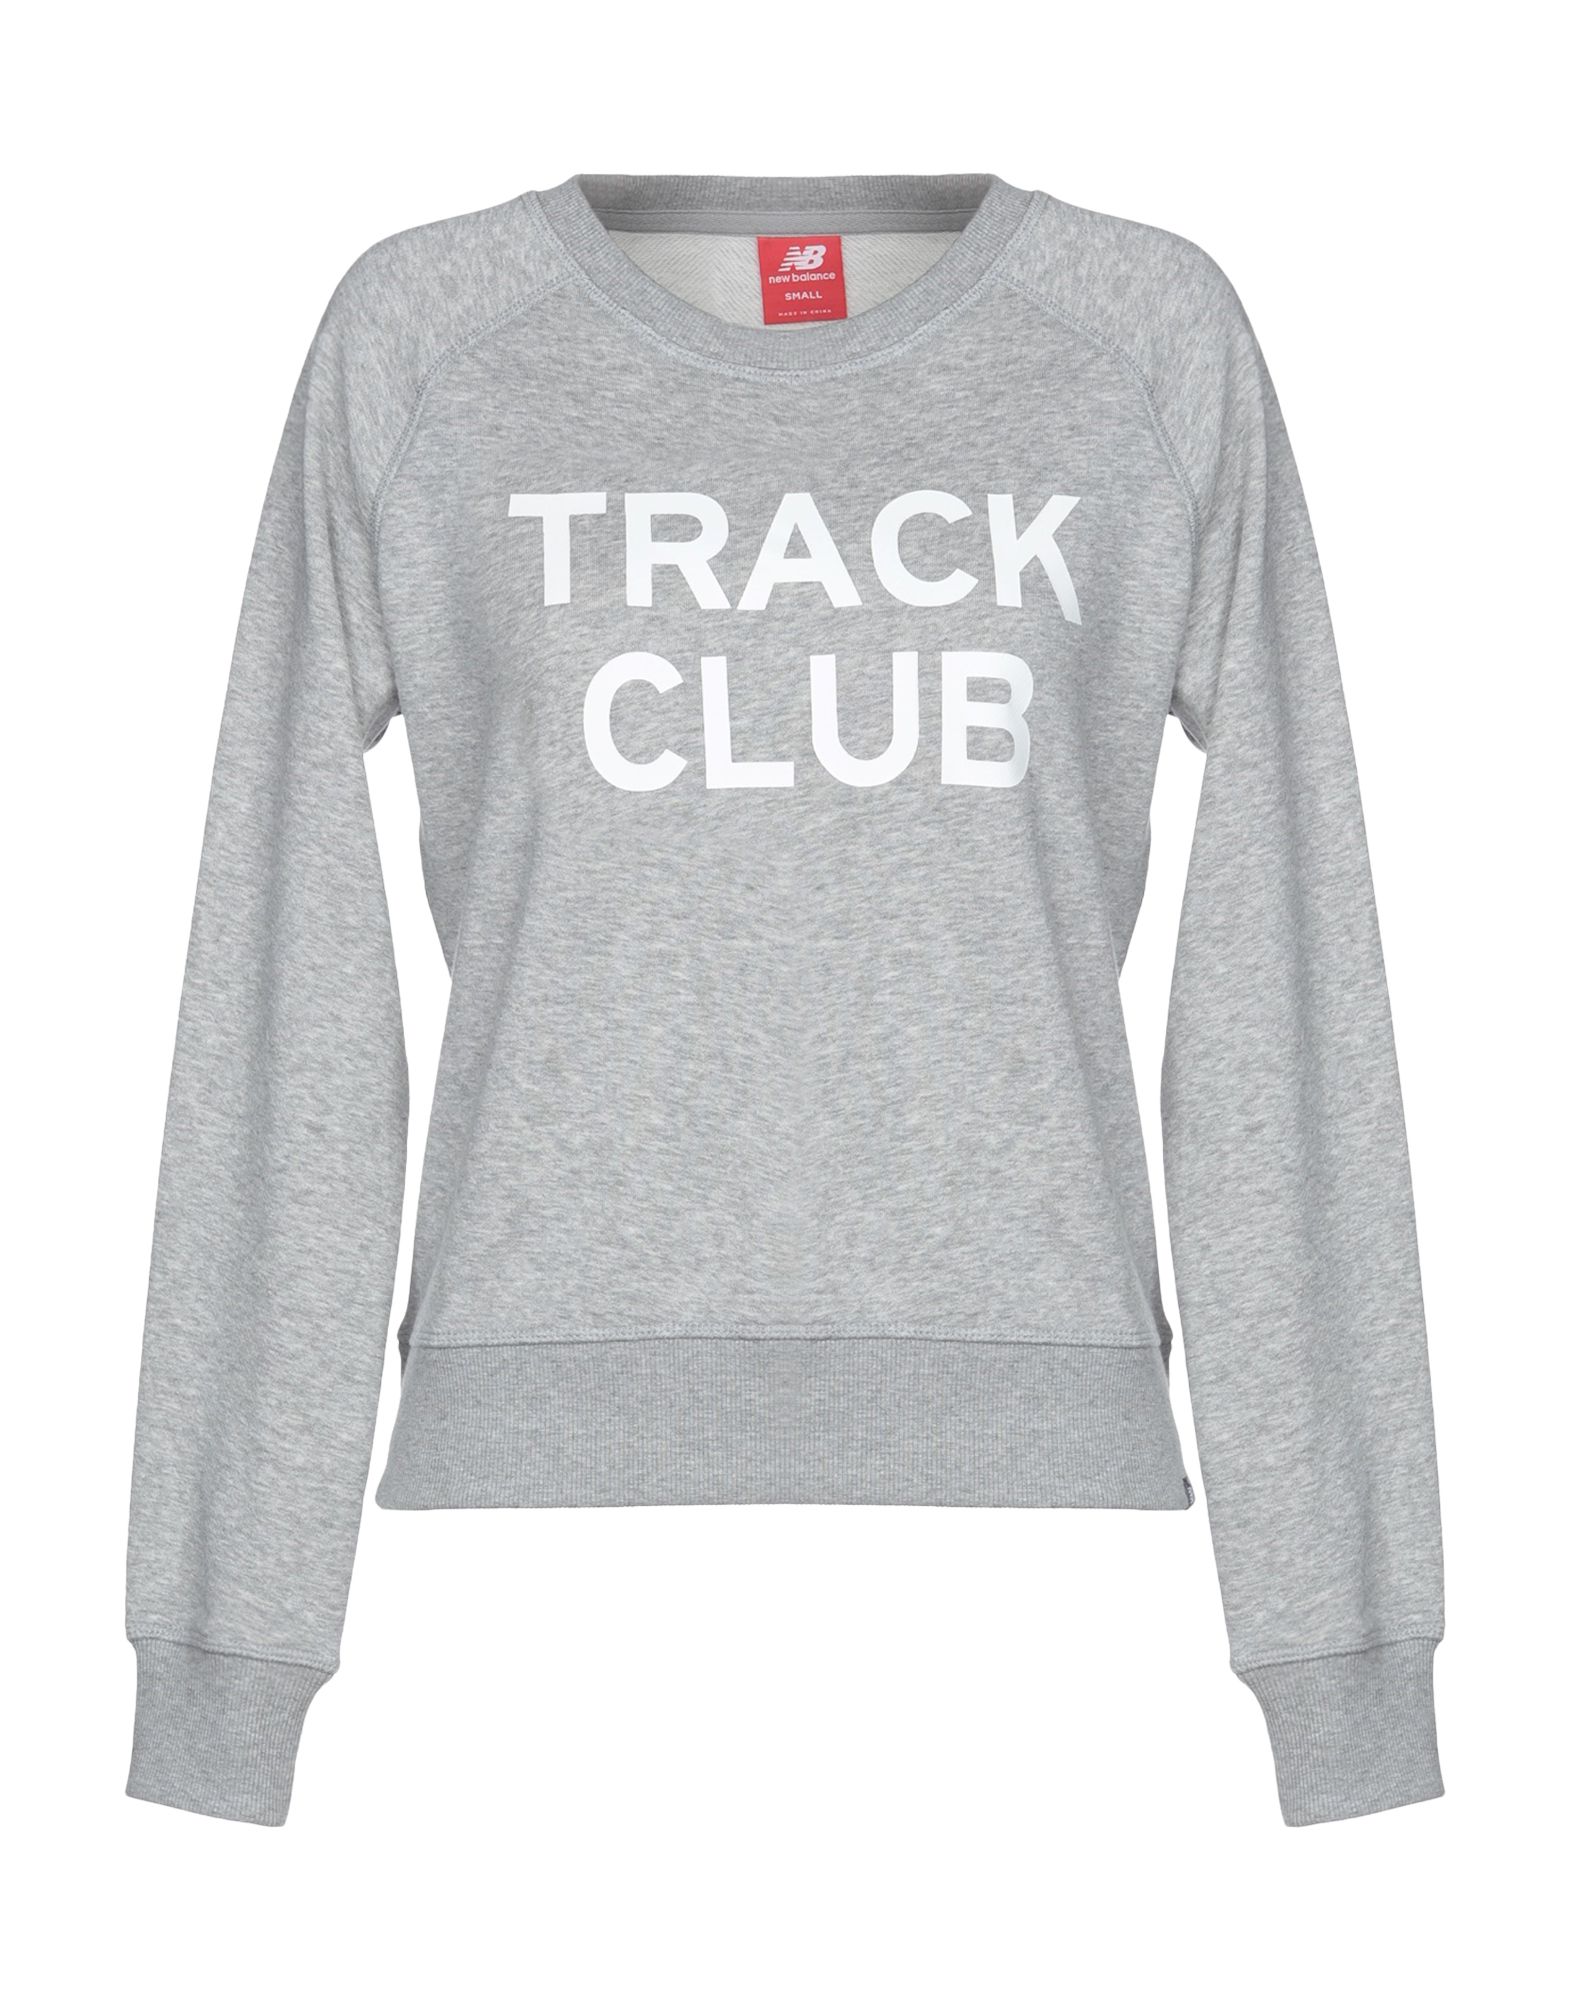 new balance track club sweatshirt